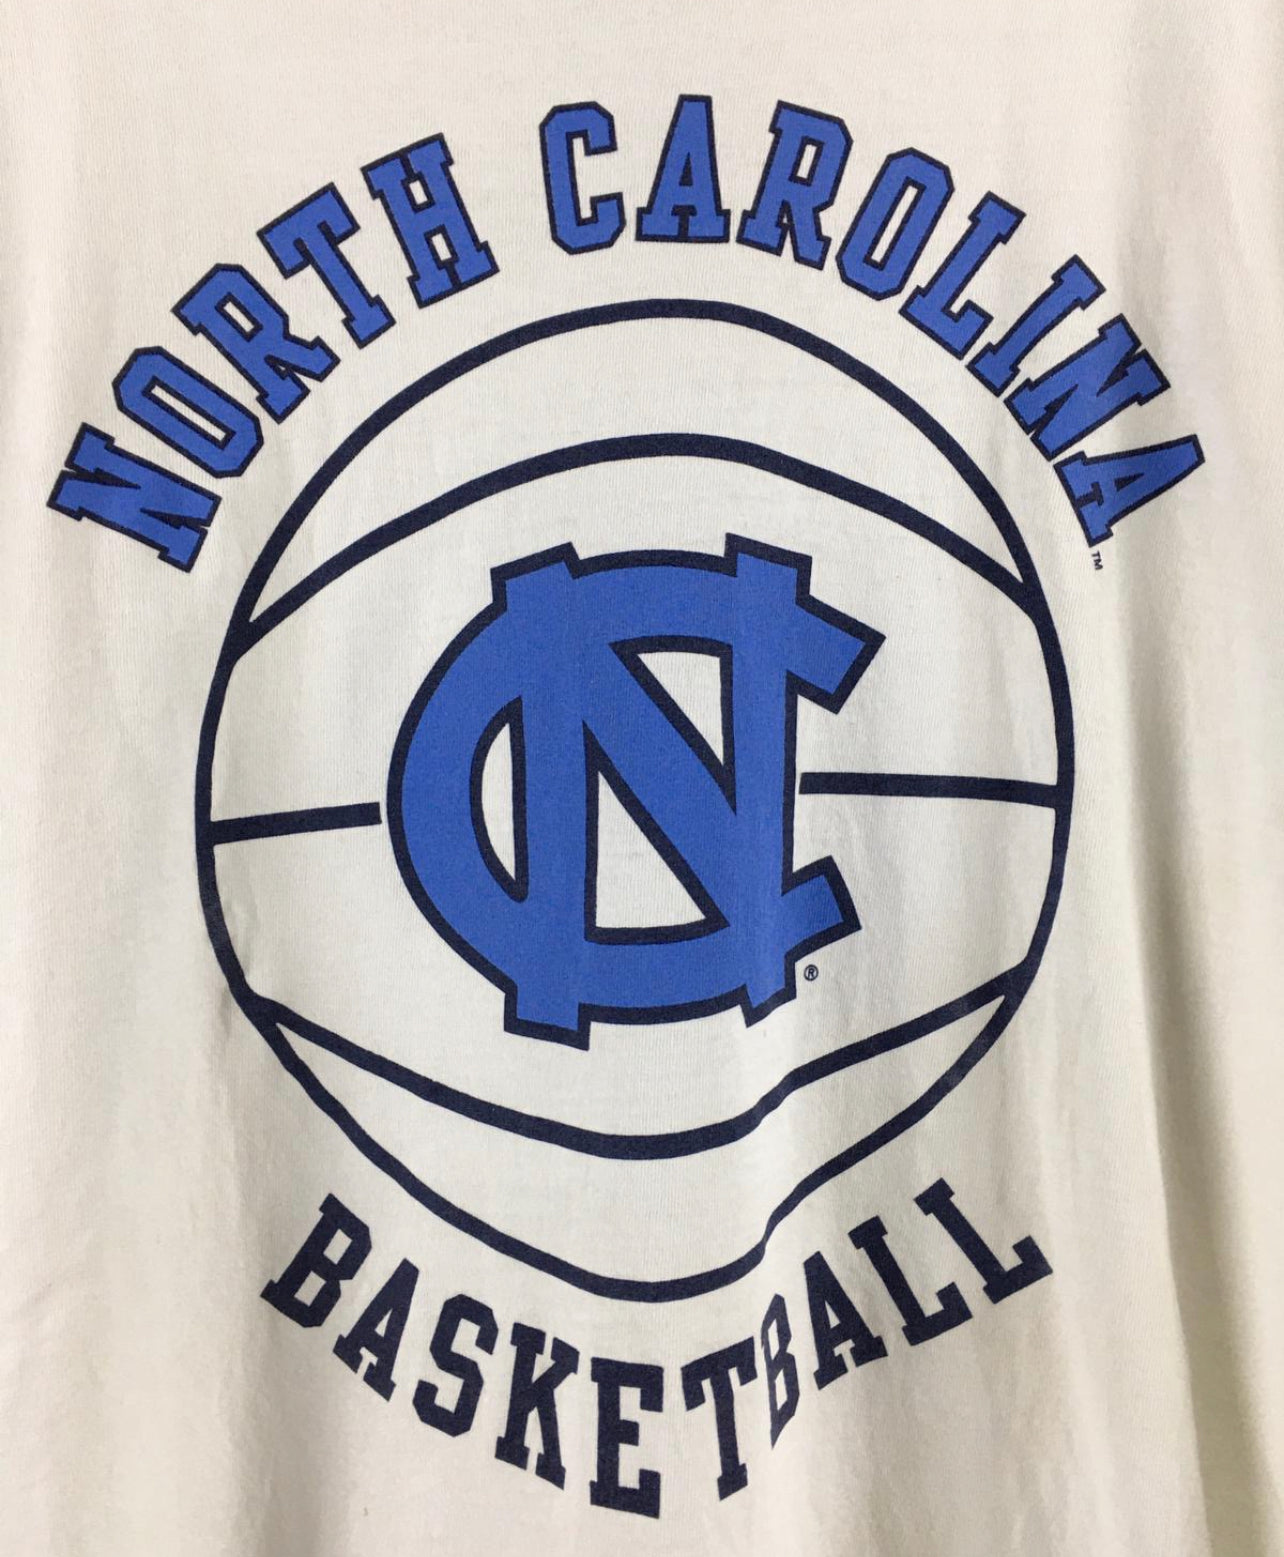 Vintage Nike Team 90's North Carolina Basketball T-shirt